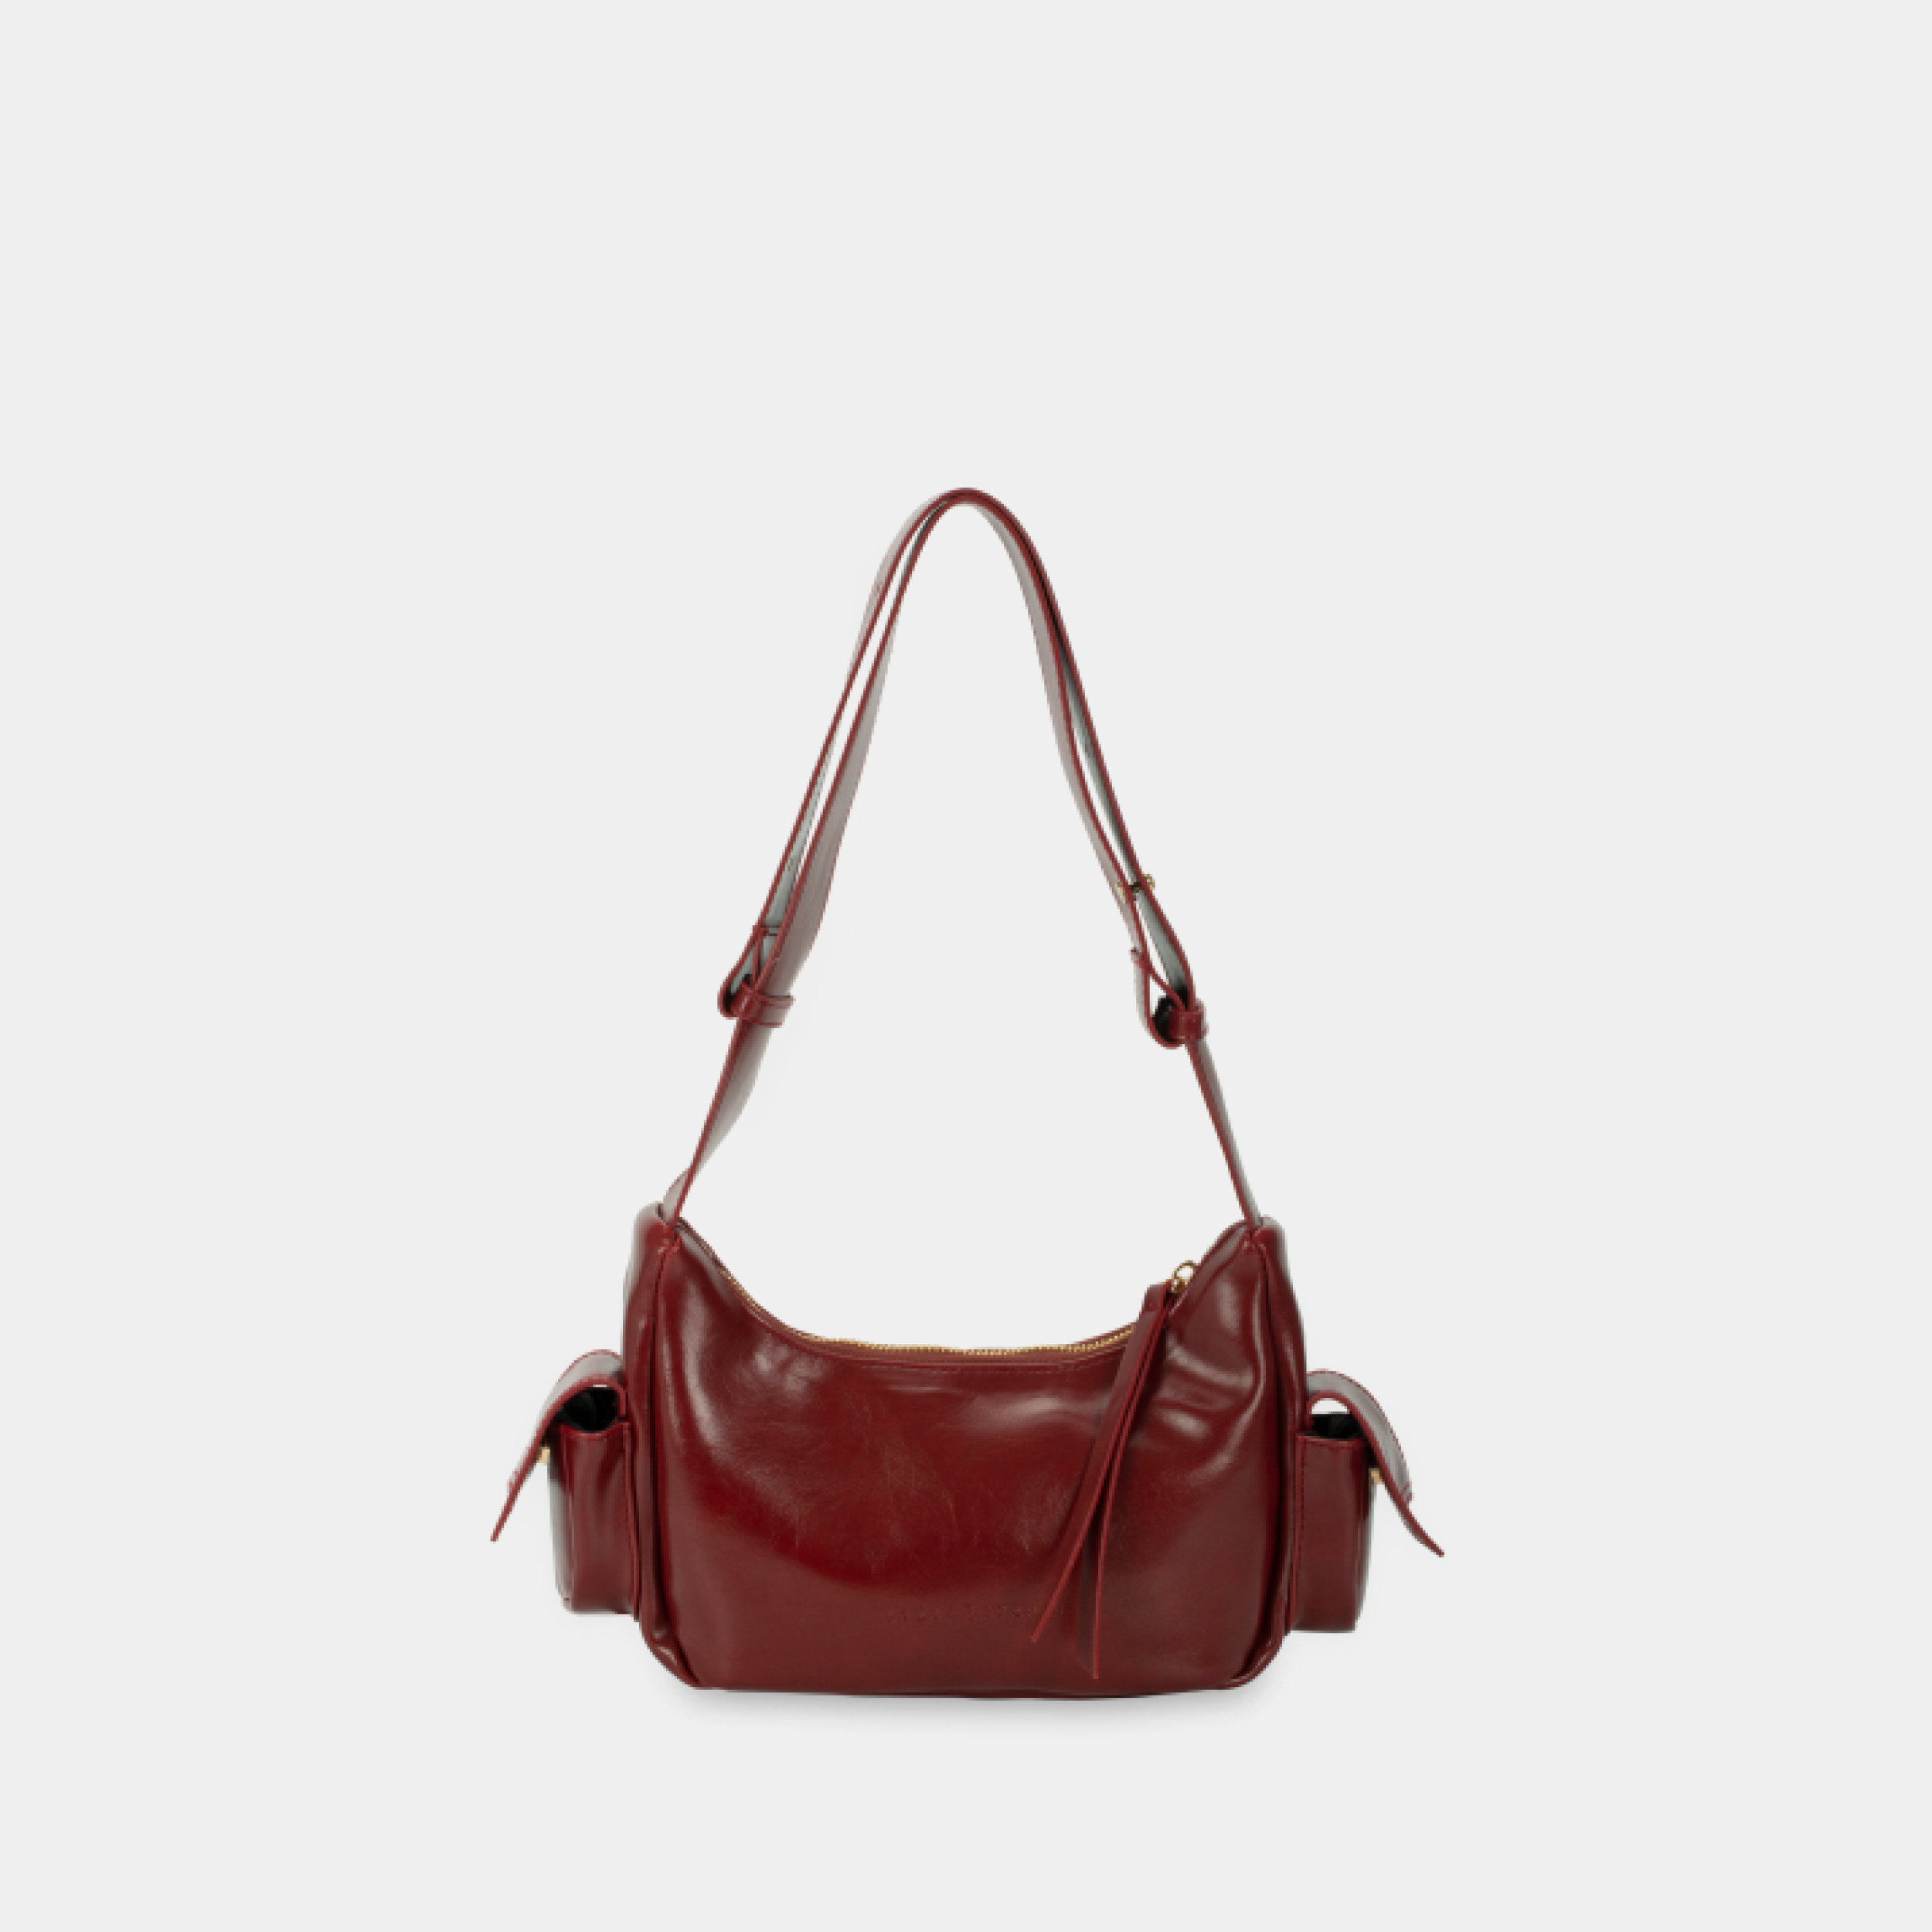 Handbag C5-Pocket size S in Burgundy